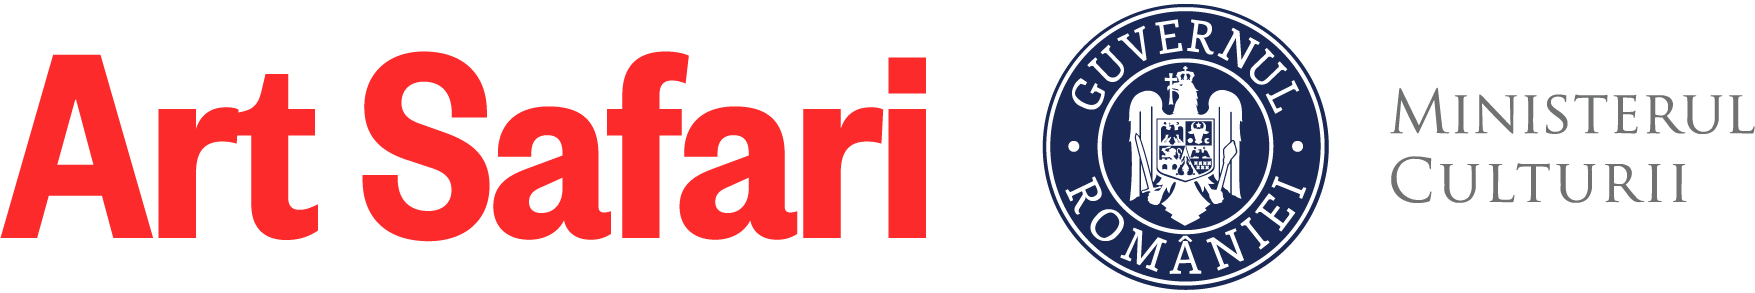 Logo Art Safari